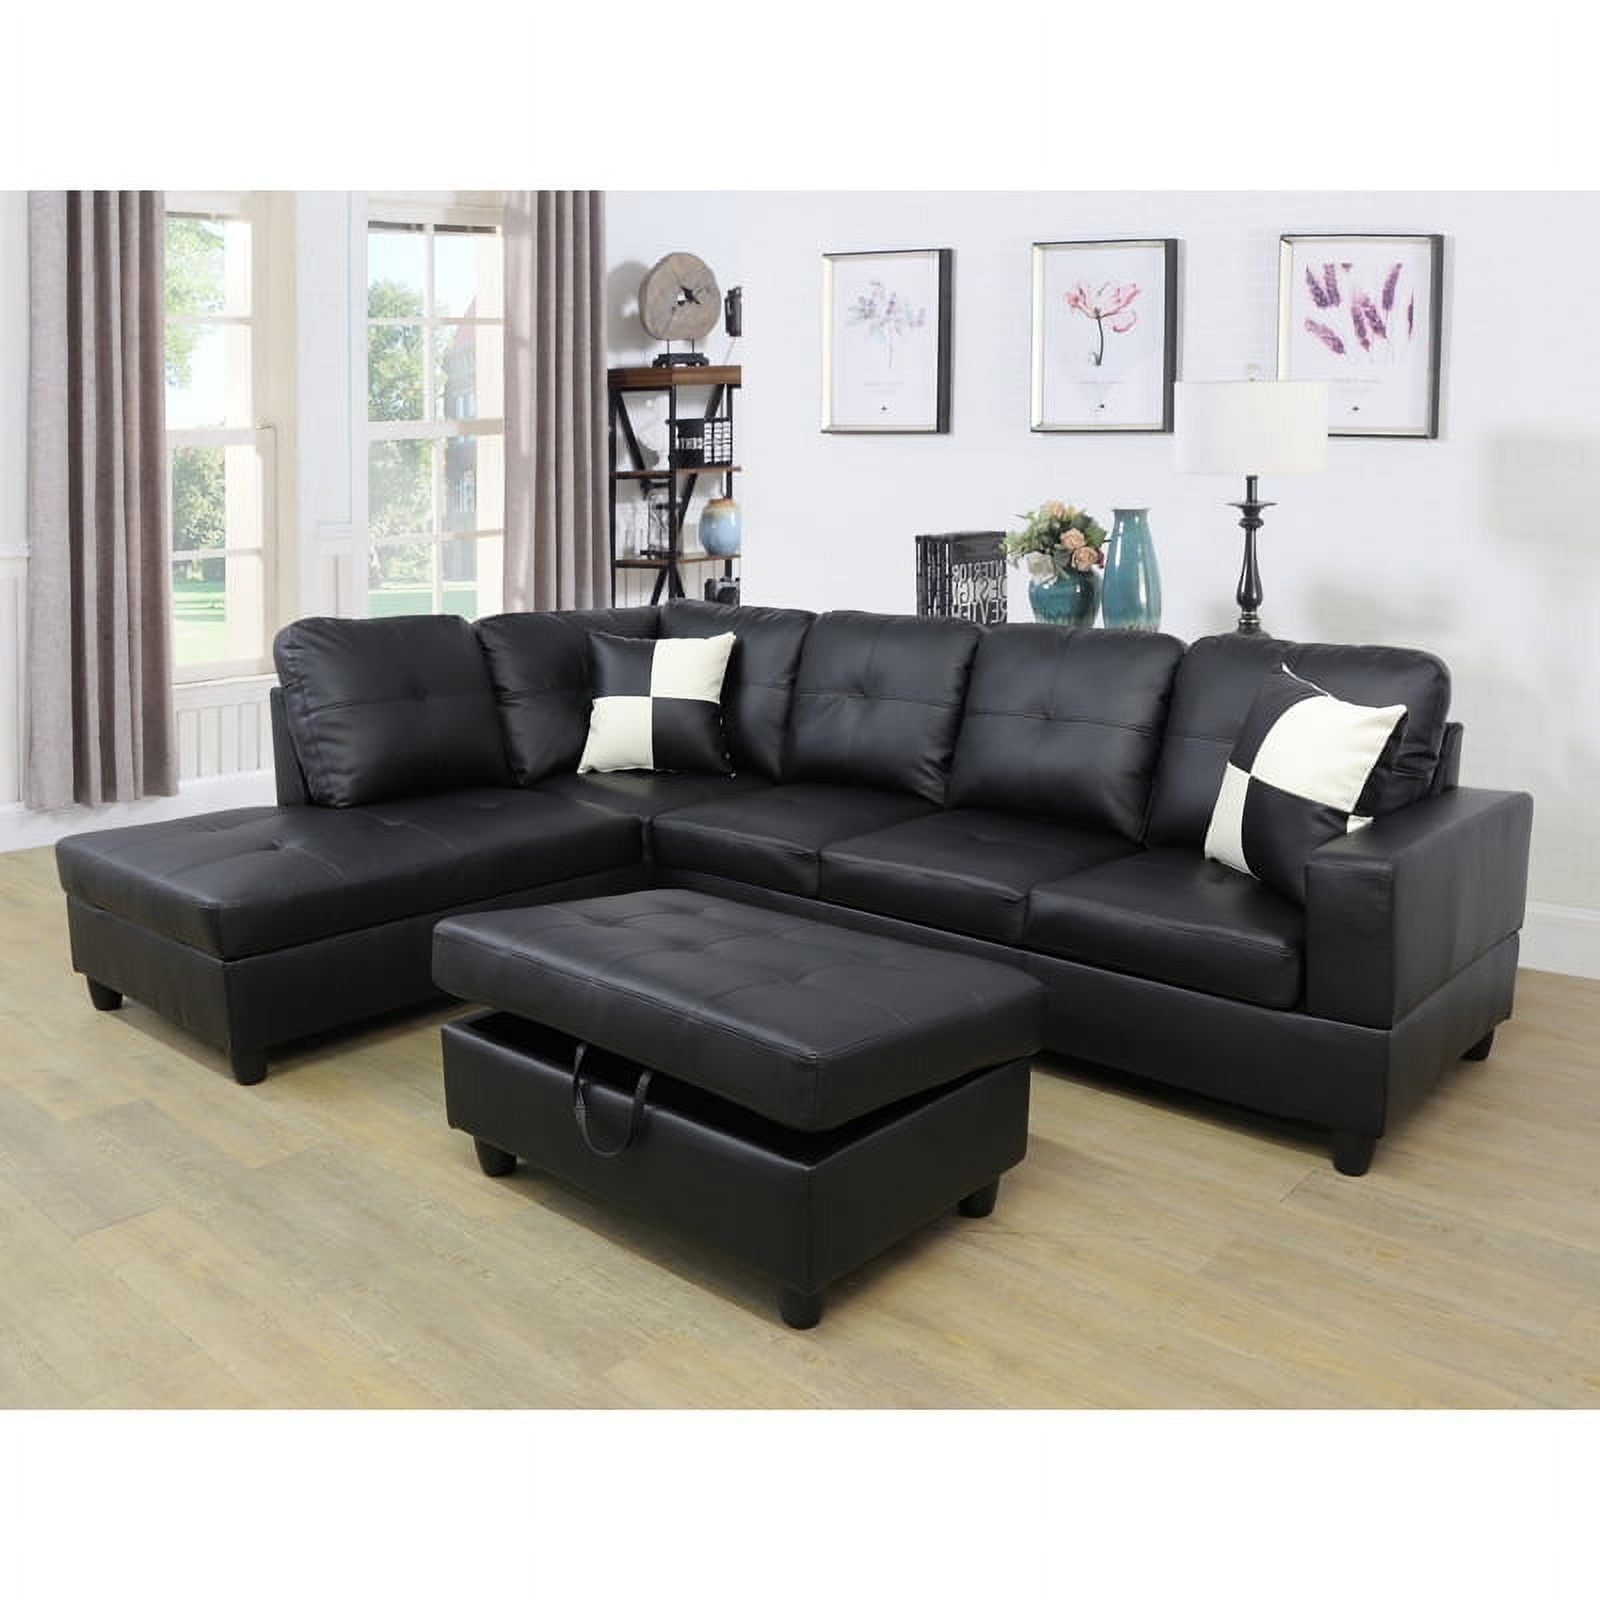 Hommoo Semi Pu Leather Sectional Sofa